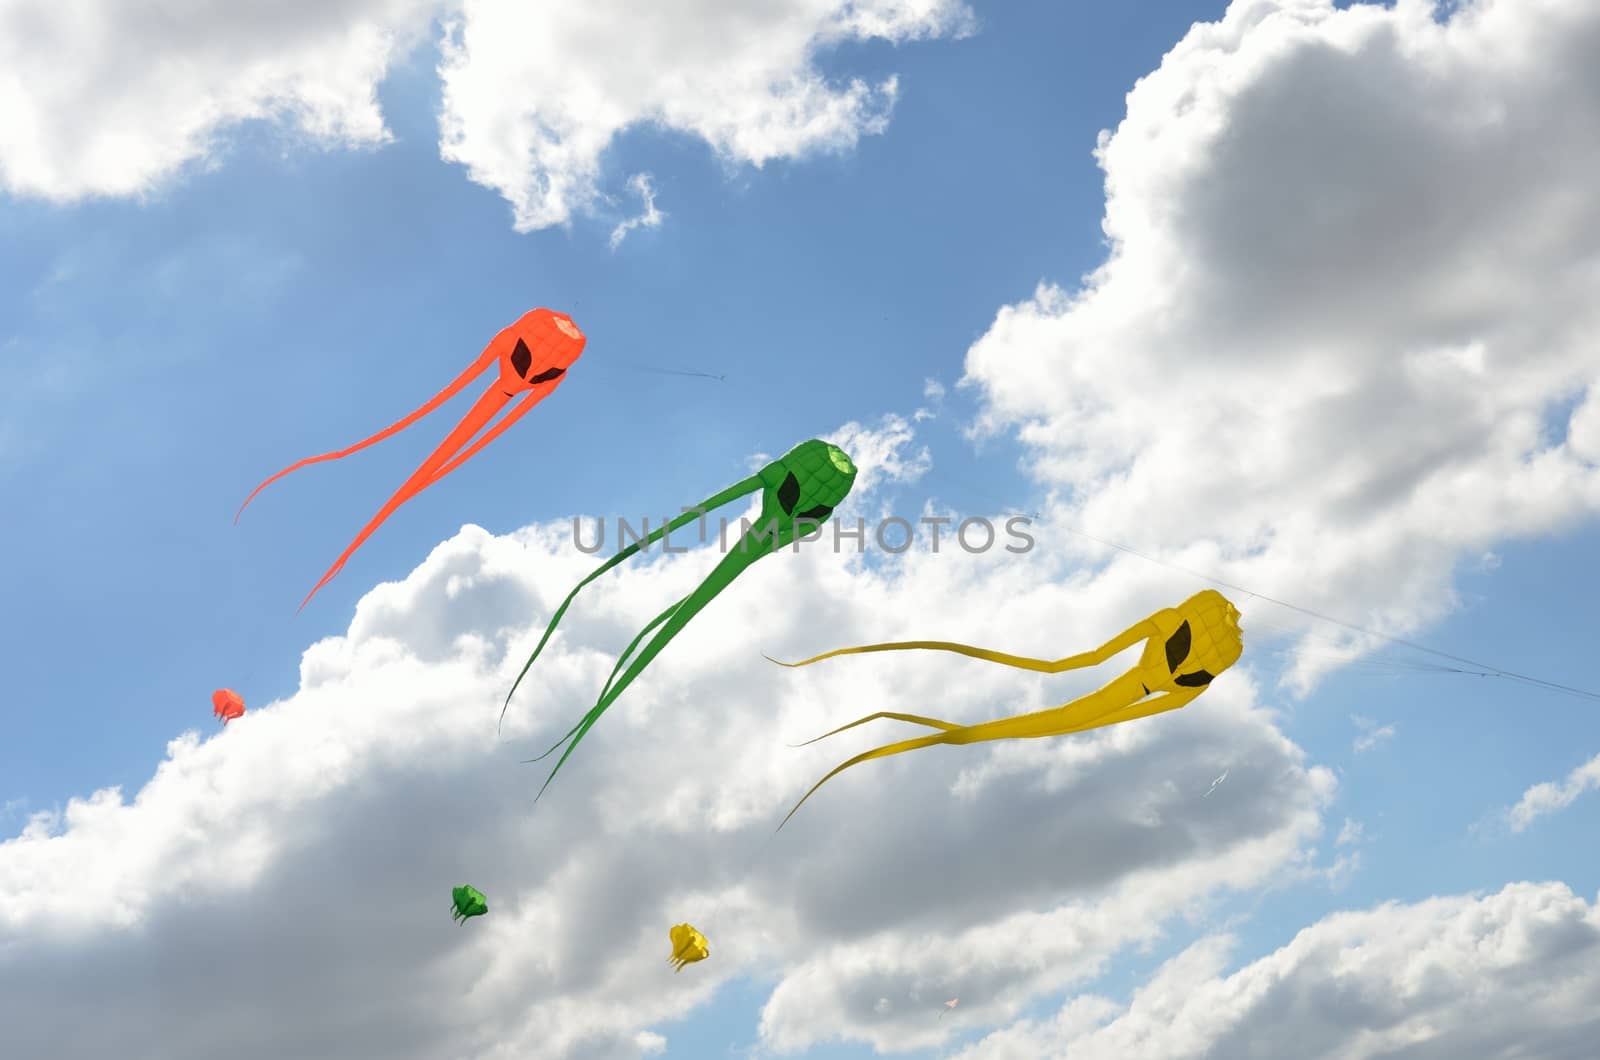 Space invader kites flying